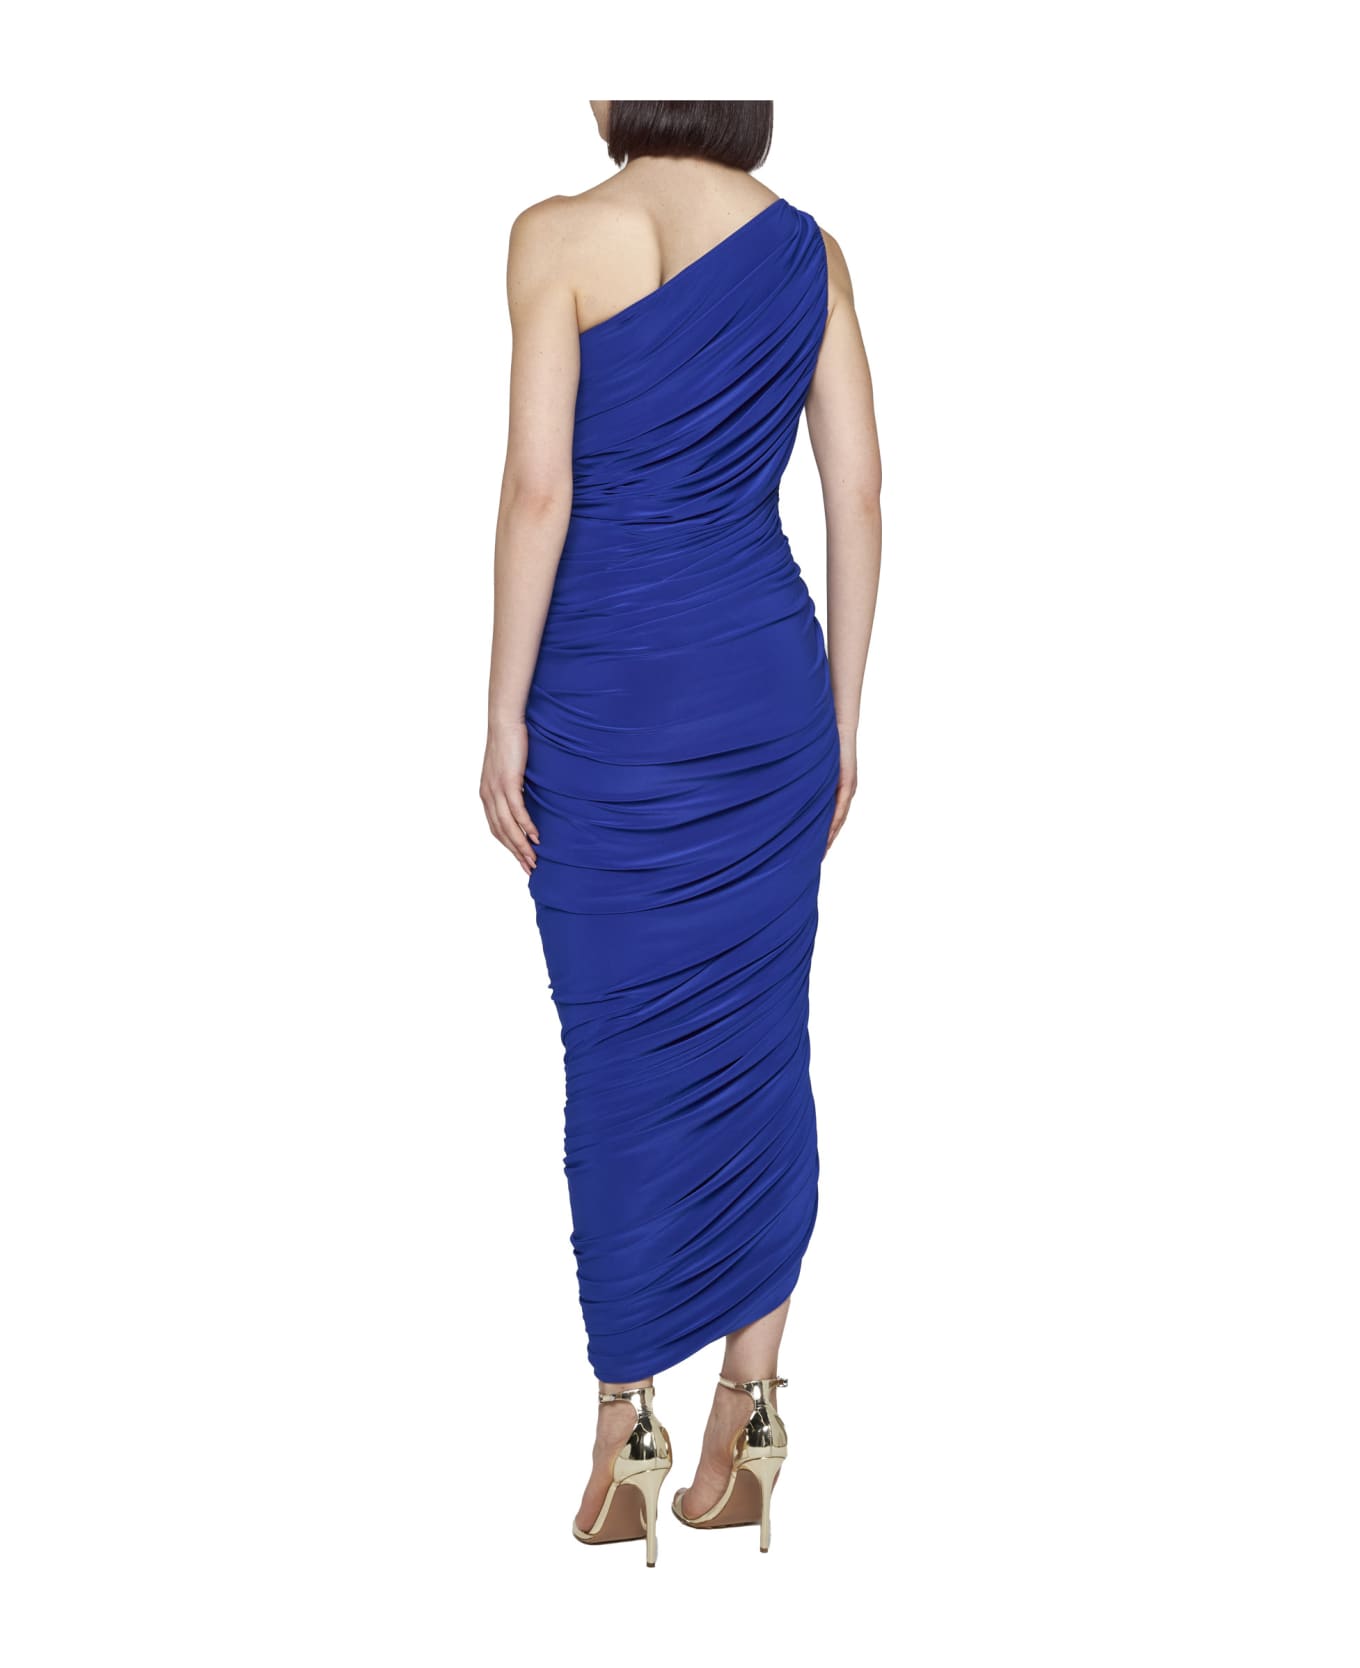 Norma Kamali Dress - Electric blue